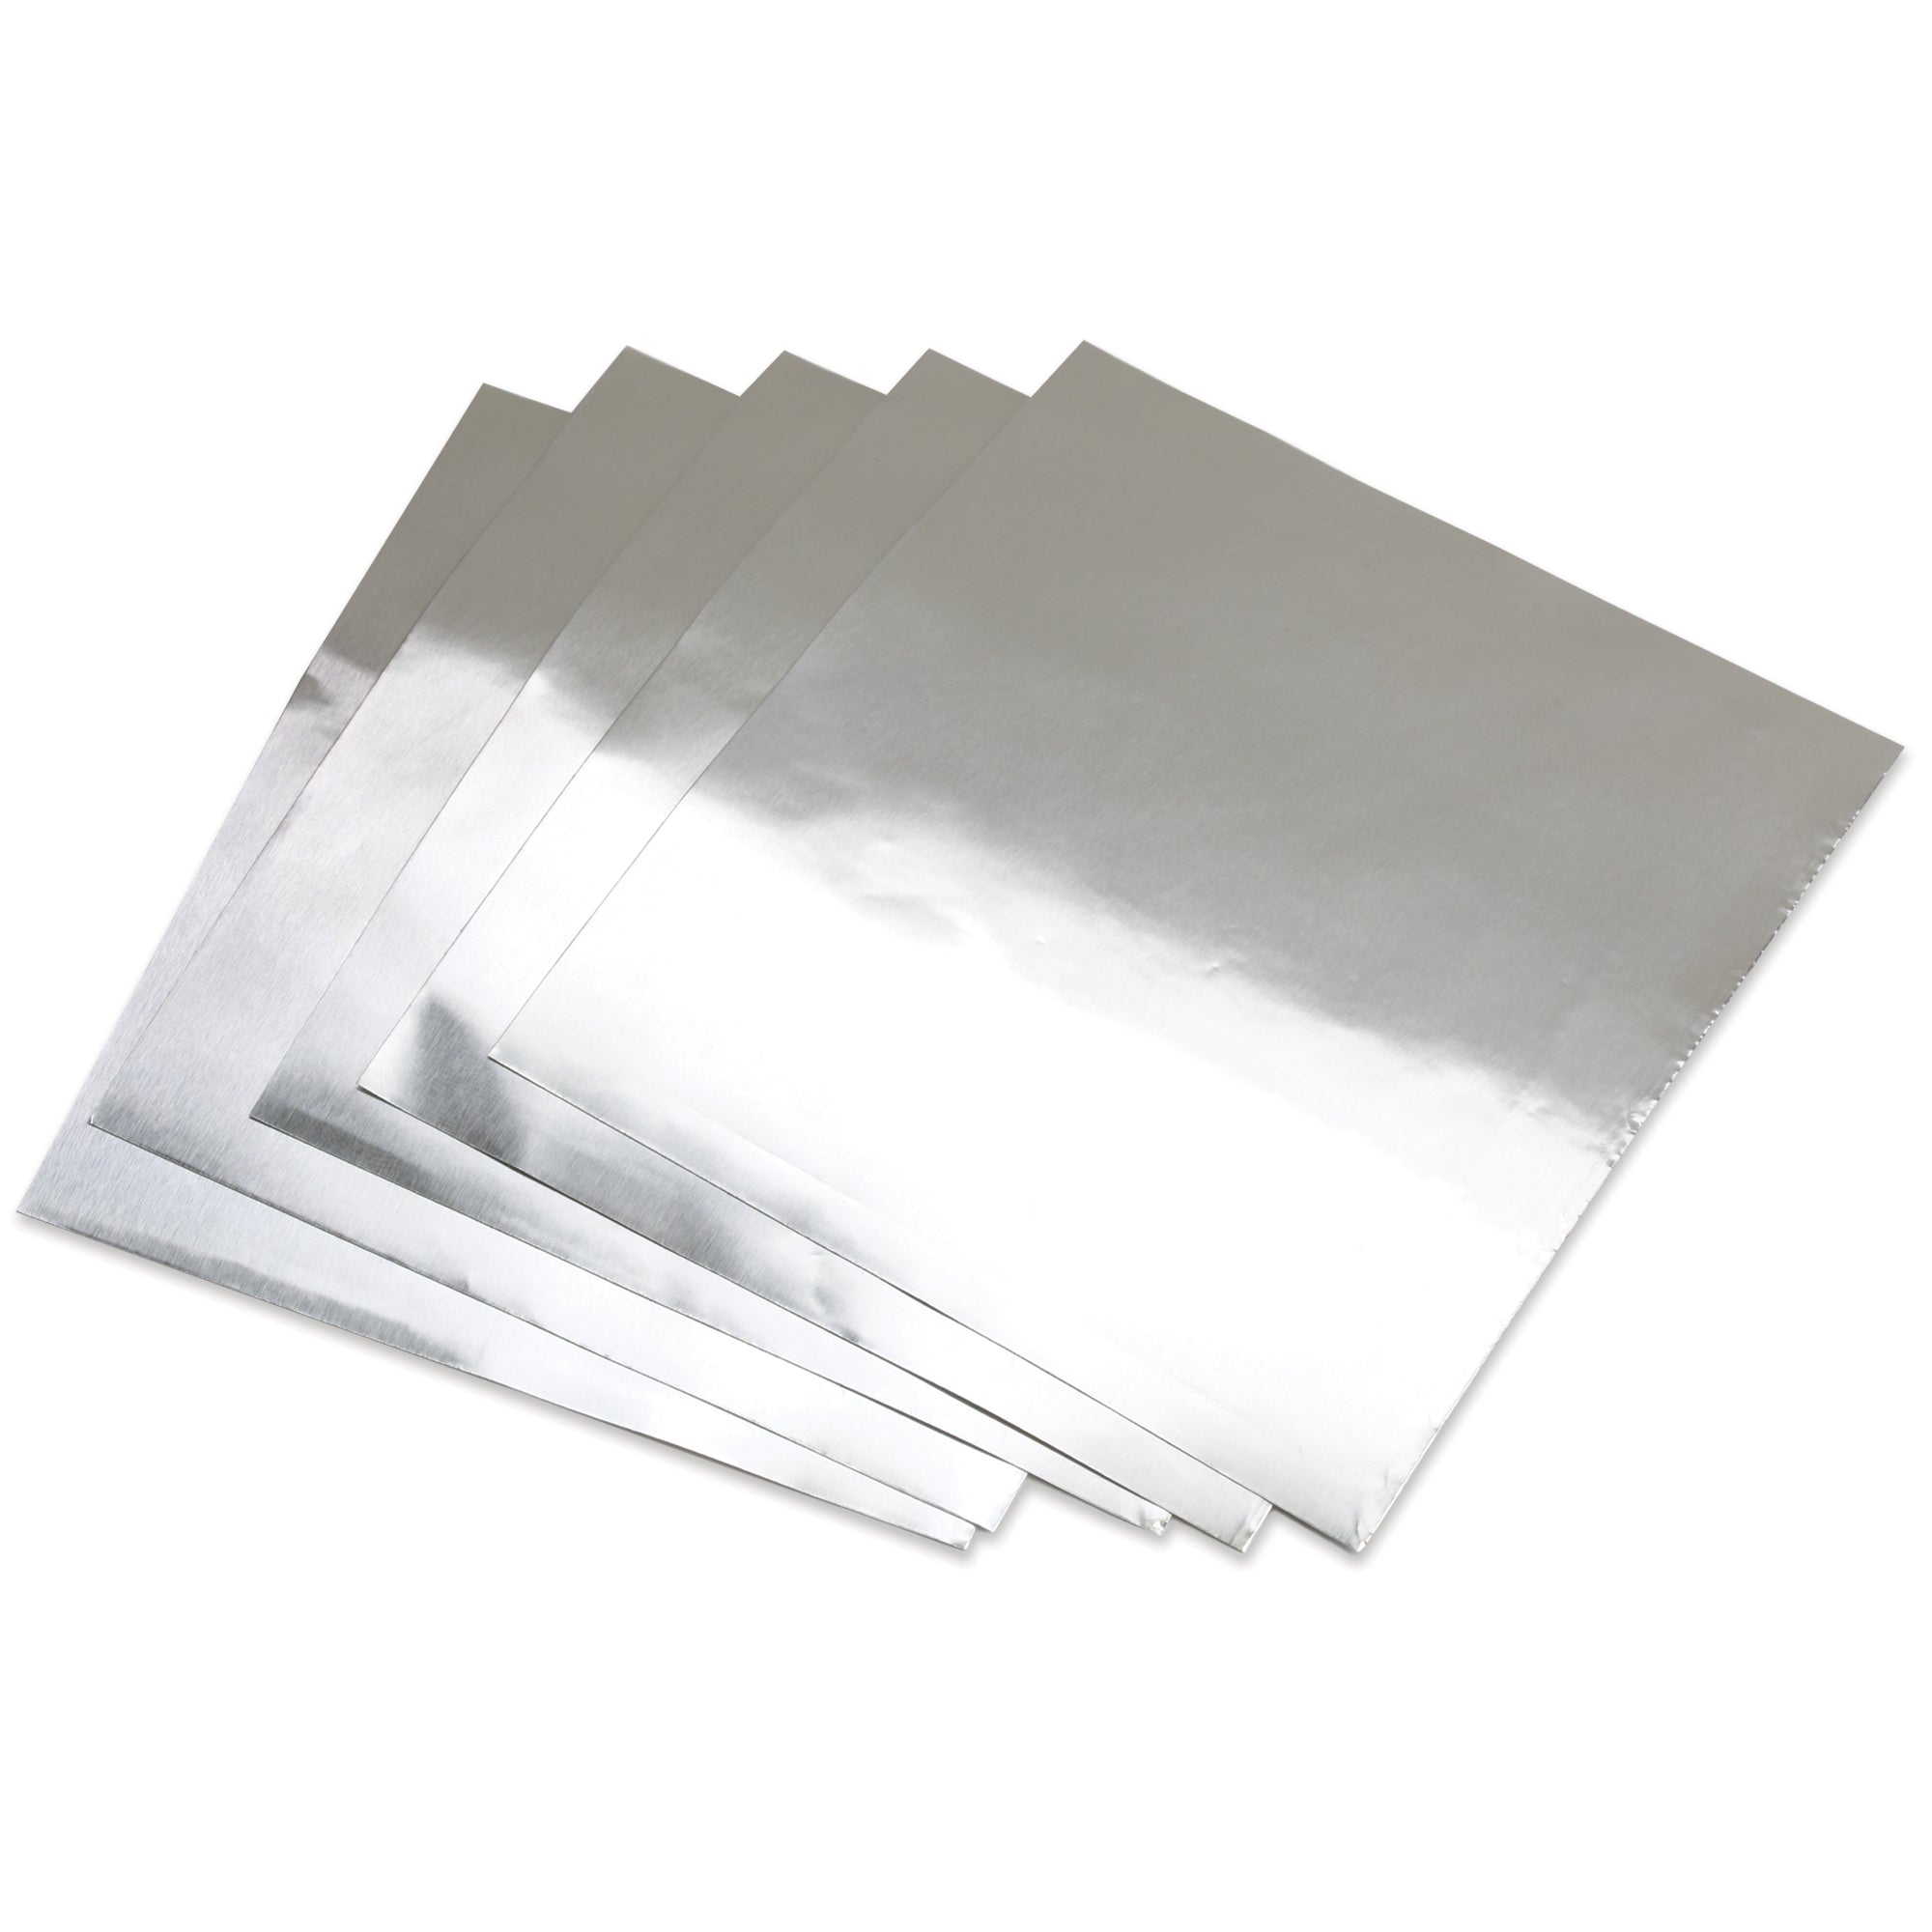 Aluminum Sheets Crafts, Aluminum Foil Sheets, Glue Gold Leaf Foil